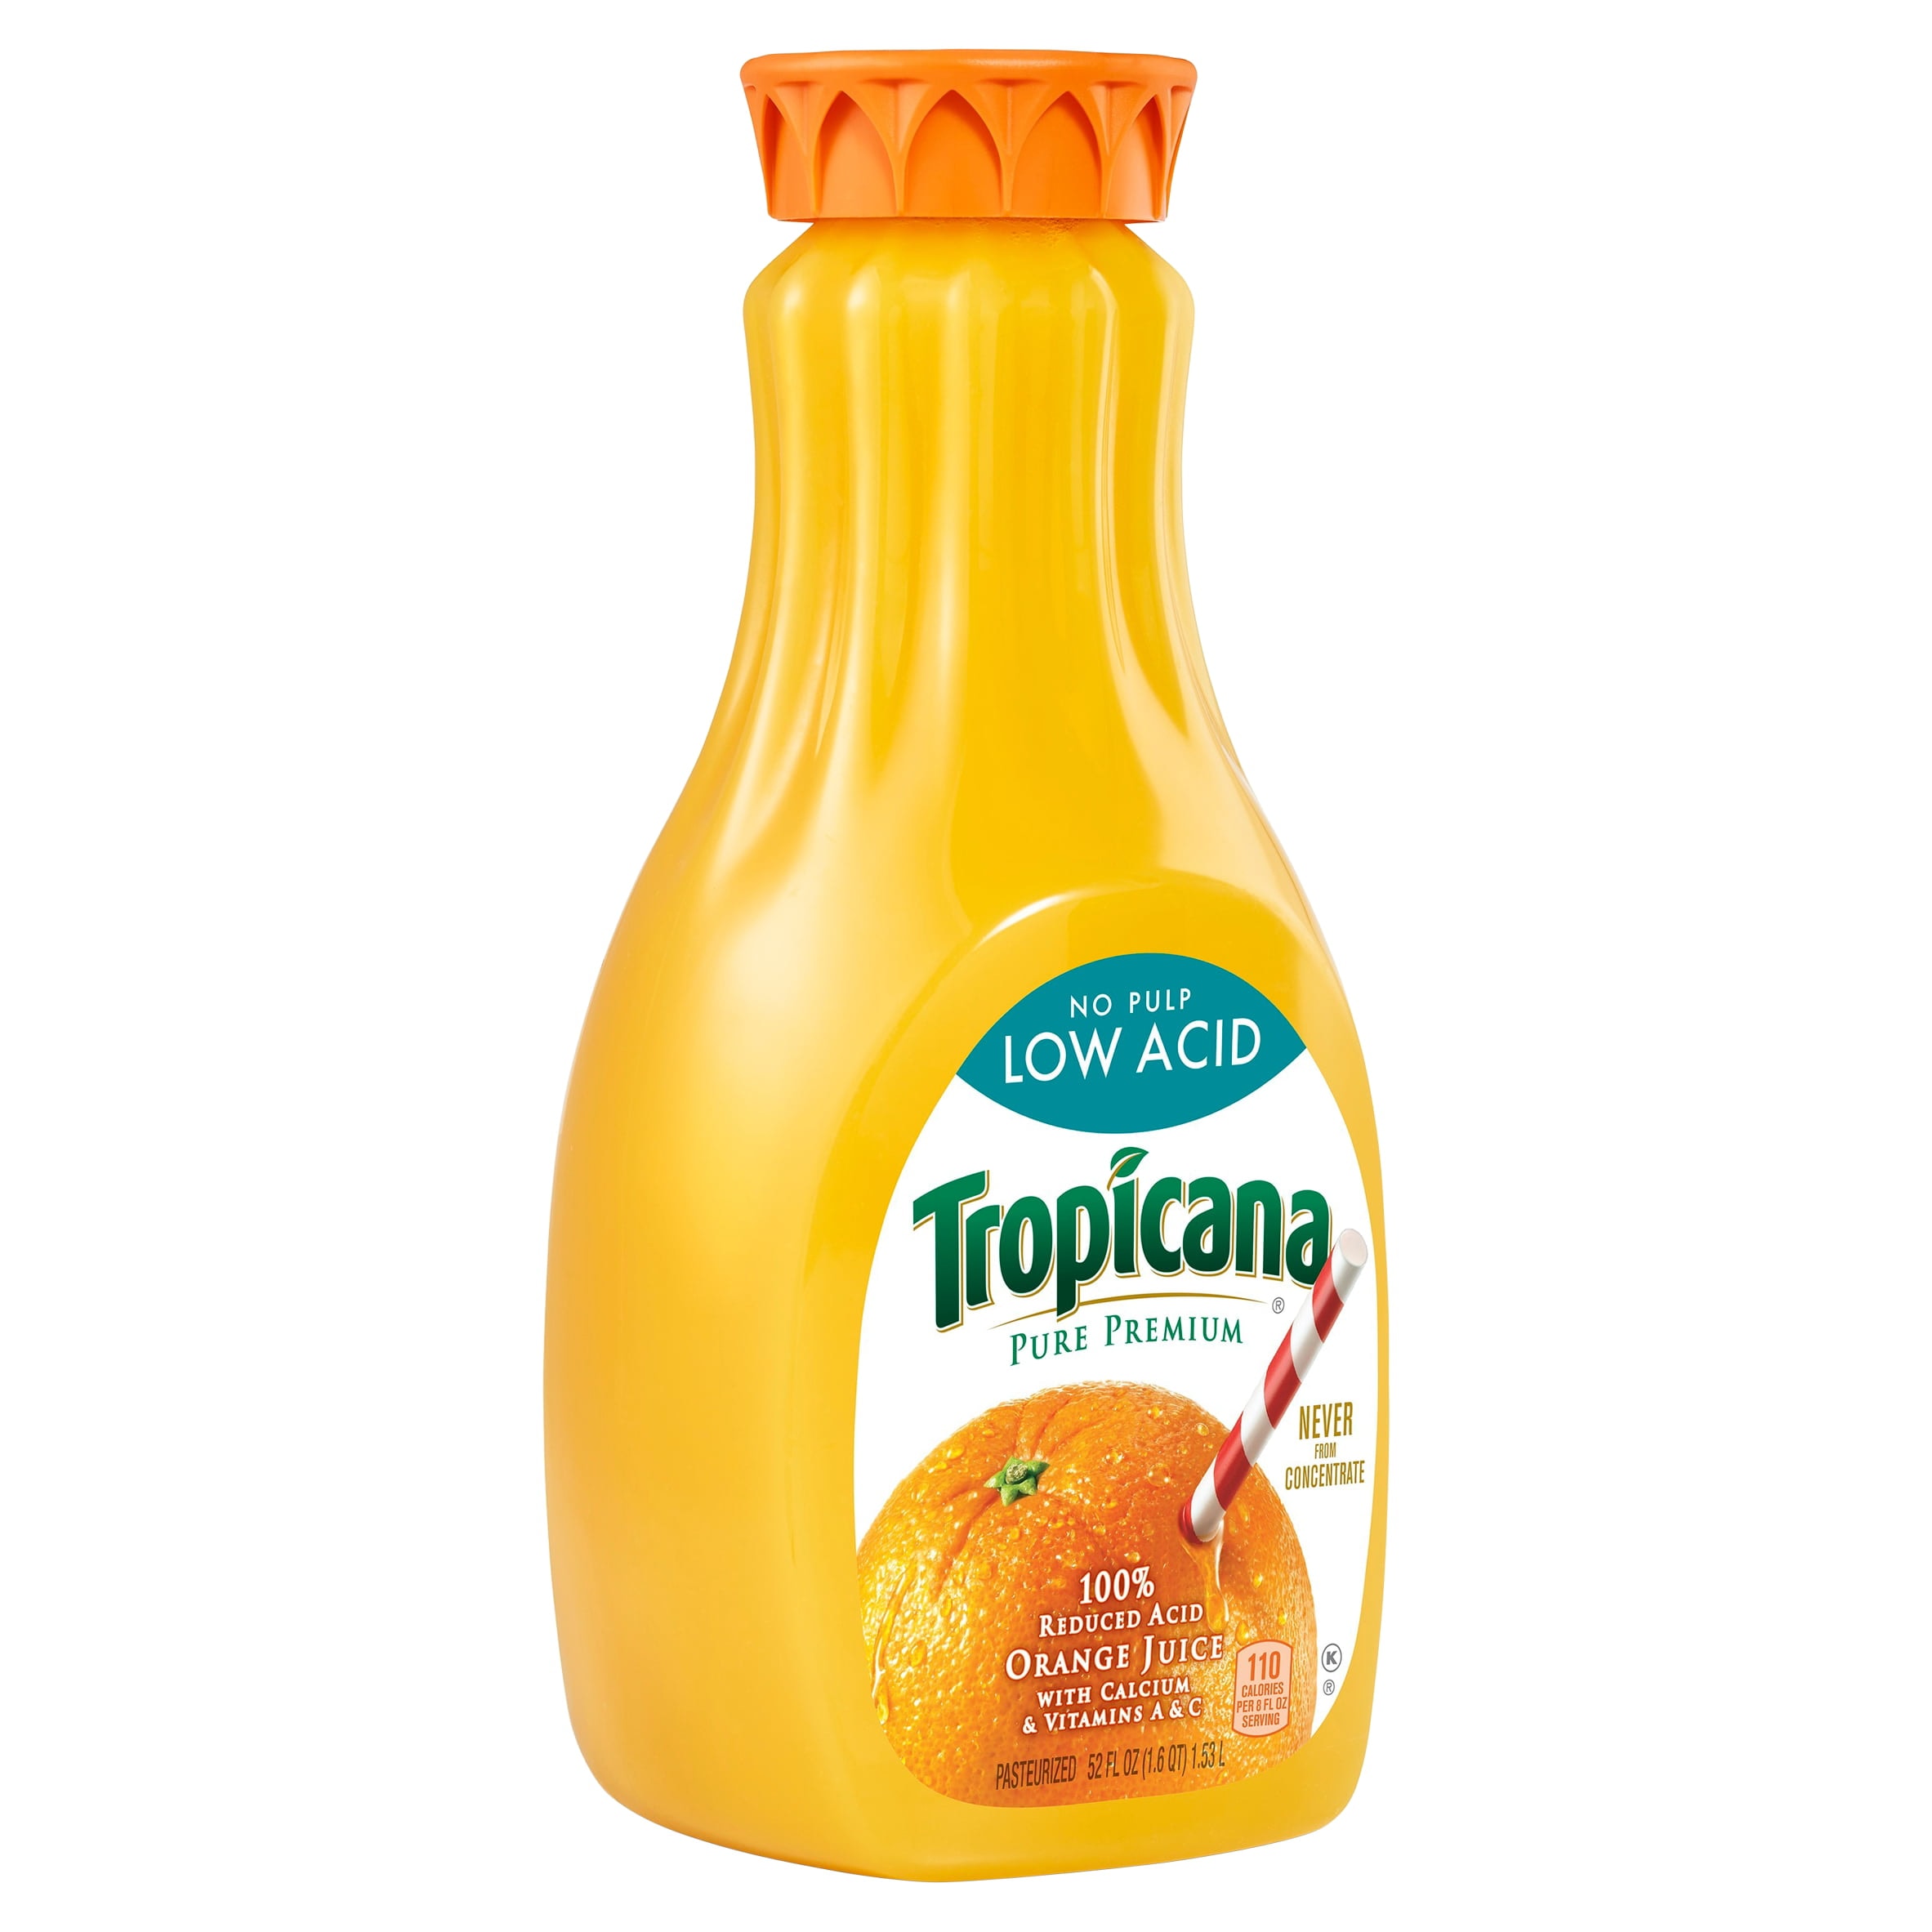 Simply Orange Pulp Free Juice Bottle, 52 Fl Oz, Juice and Drinks